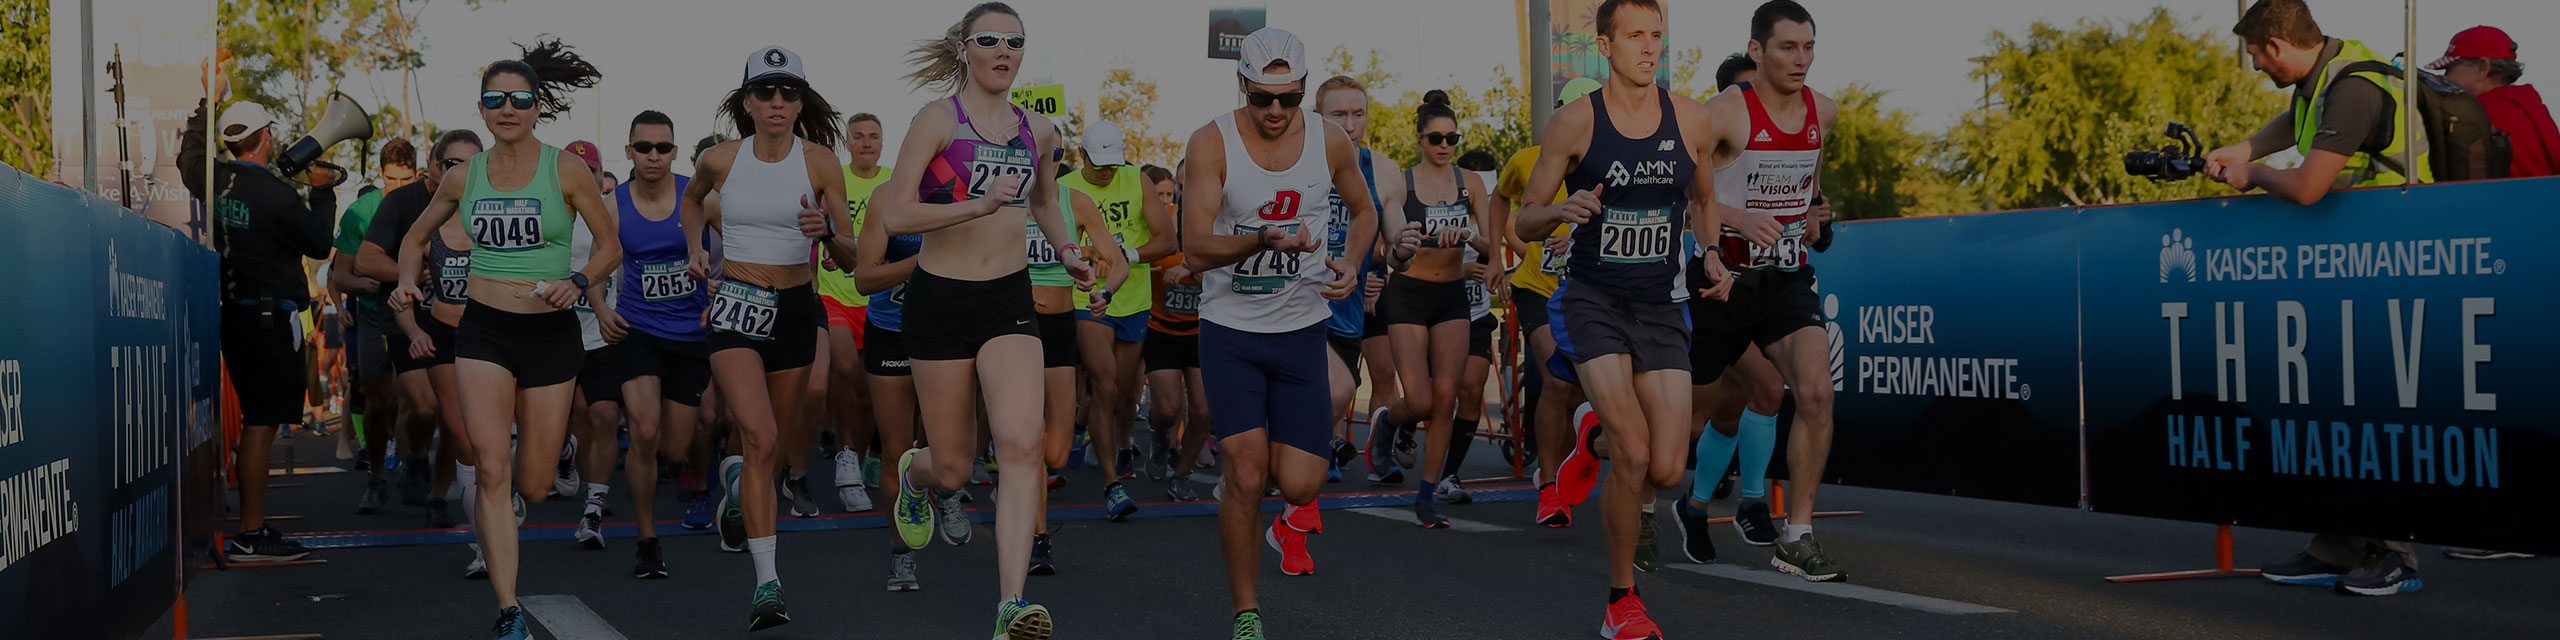 5K Runs-Kaiser Permanente Thrive Half Marathon & 5K